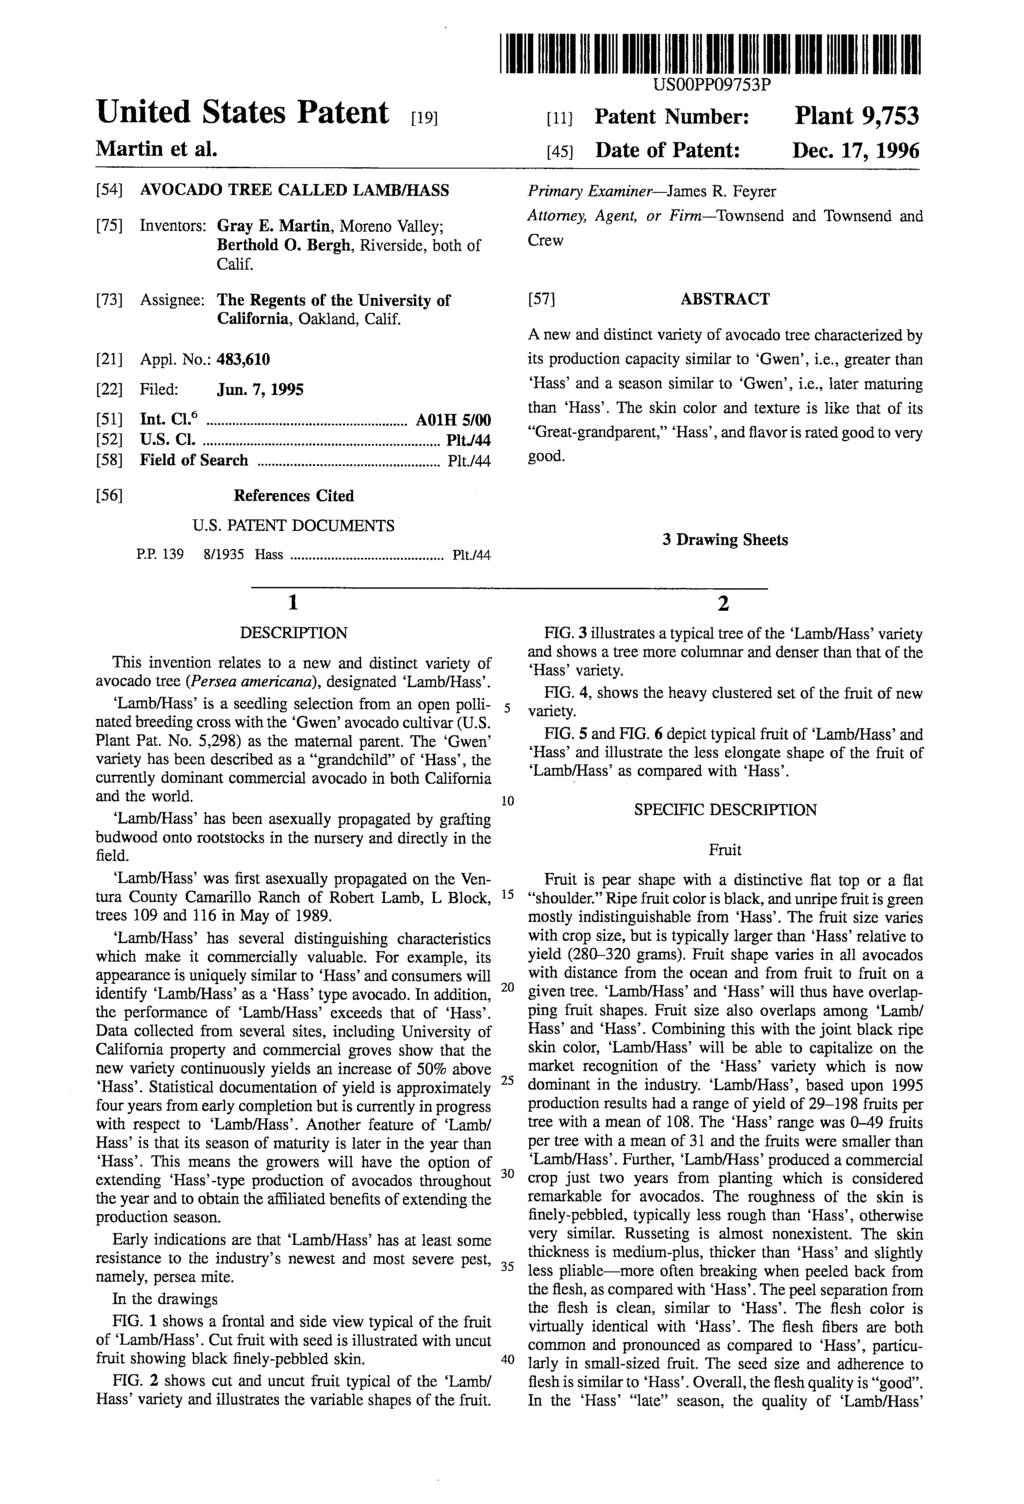 United States Patent 19 Martin et al. (54) AVOCADO TREE CALLED LAMB/HASS (75) Inventors: Gray E. Martin, Moreno Valley; Berthold O. Bergh, Riverside, both of Calif.